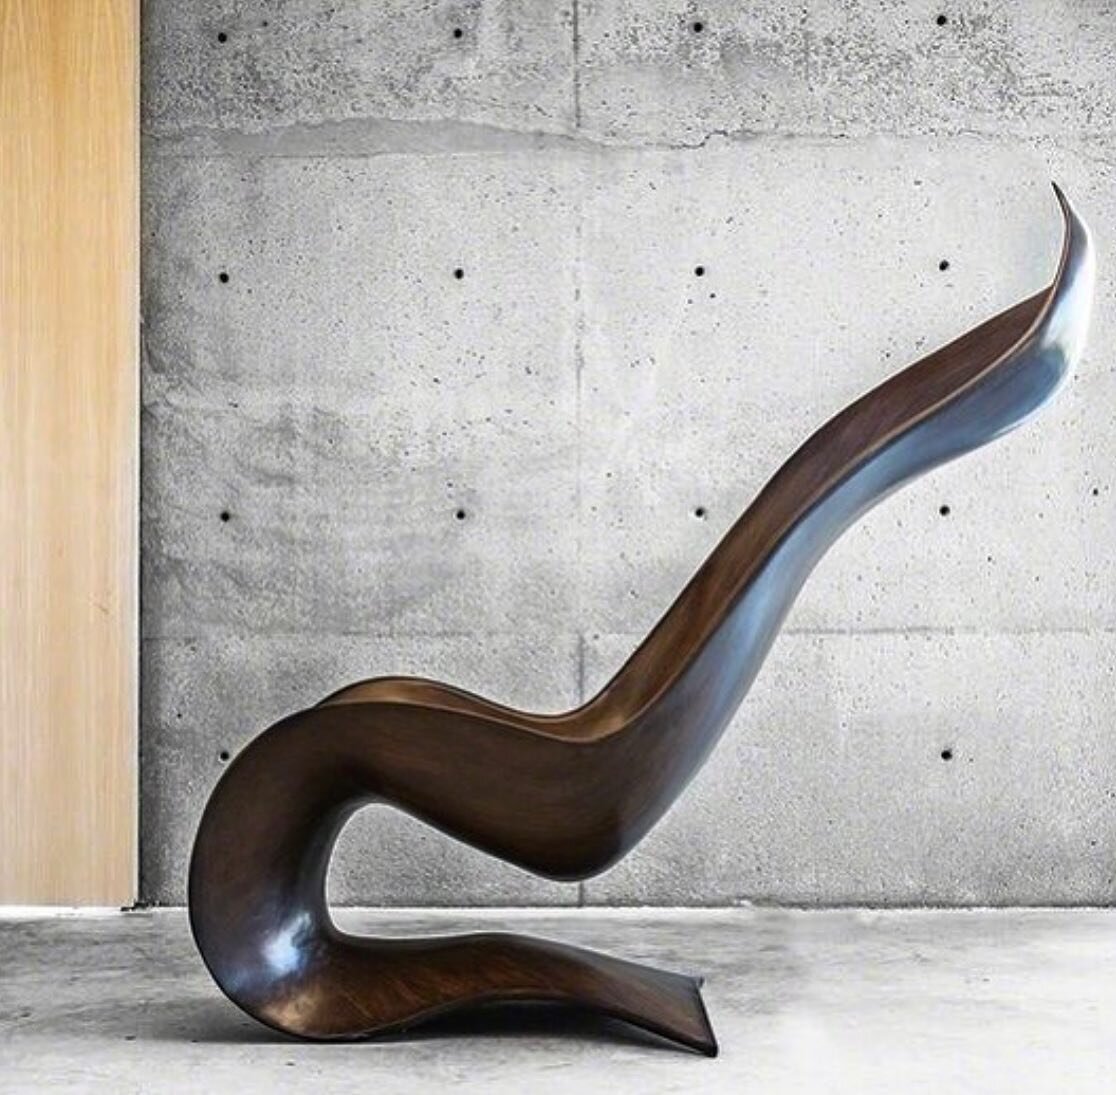 Stunning! #objectofdesire Petal Chair @gullajonsdottir @artsy  via @wexlergallery #detailsmatter #200lex #livingart #nyc